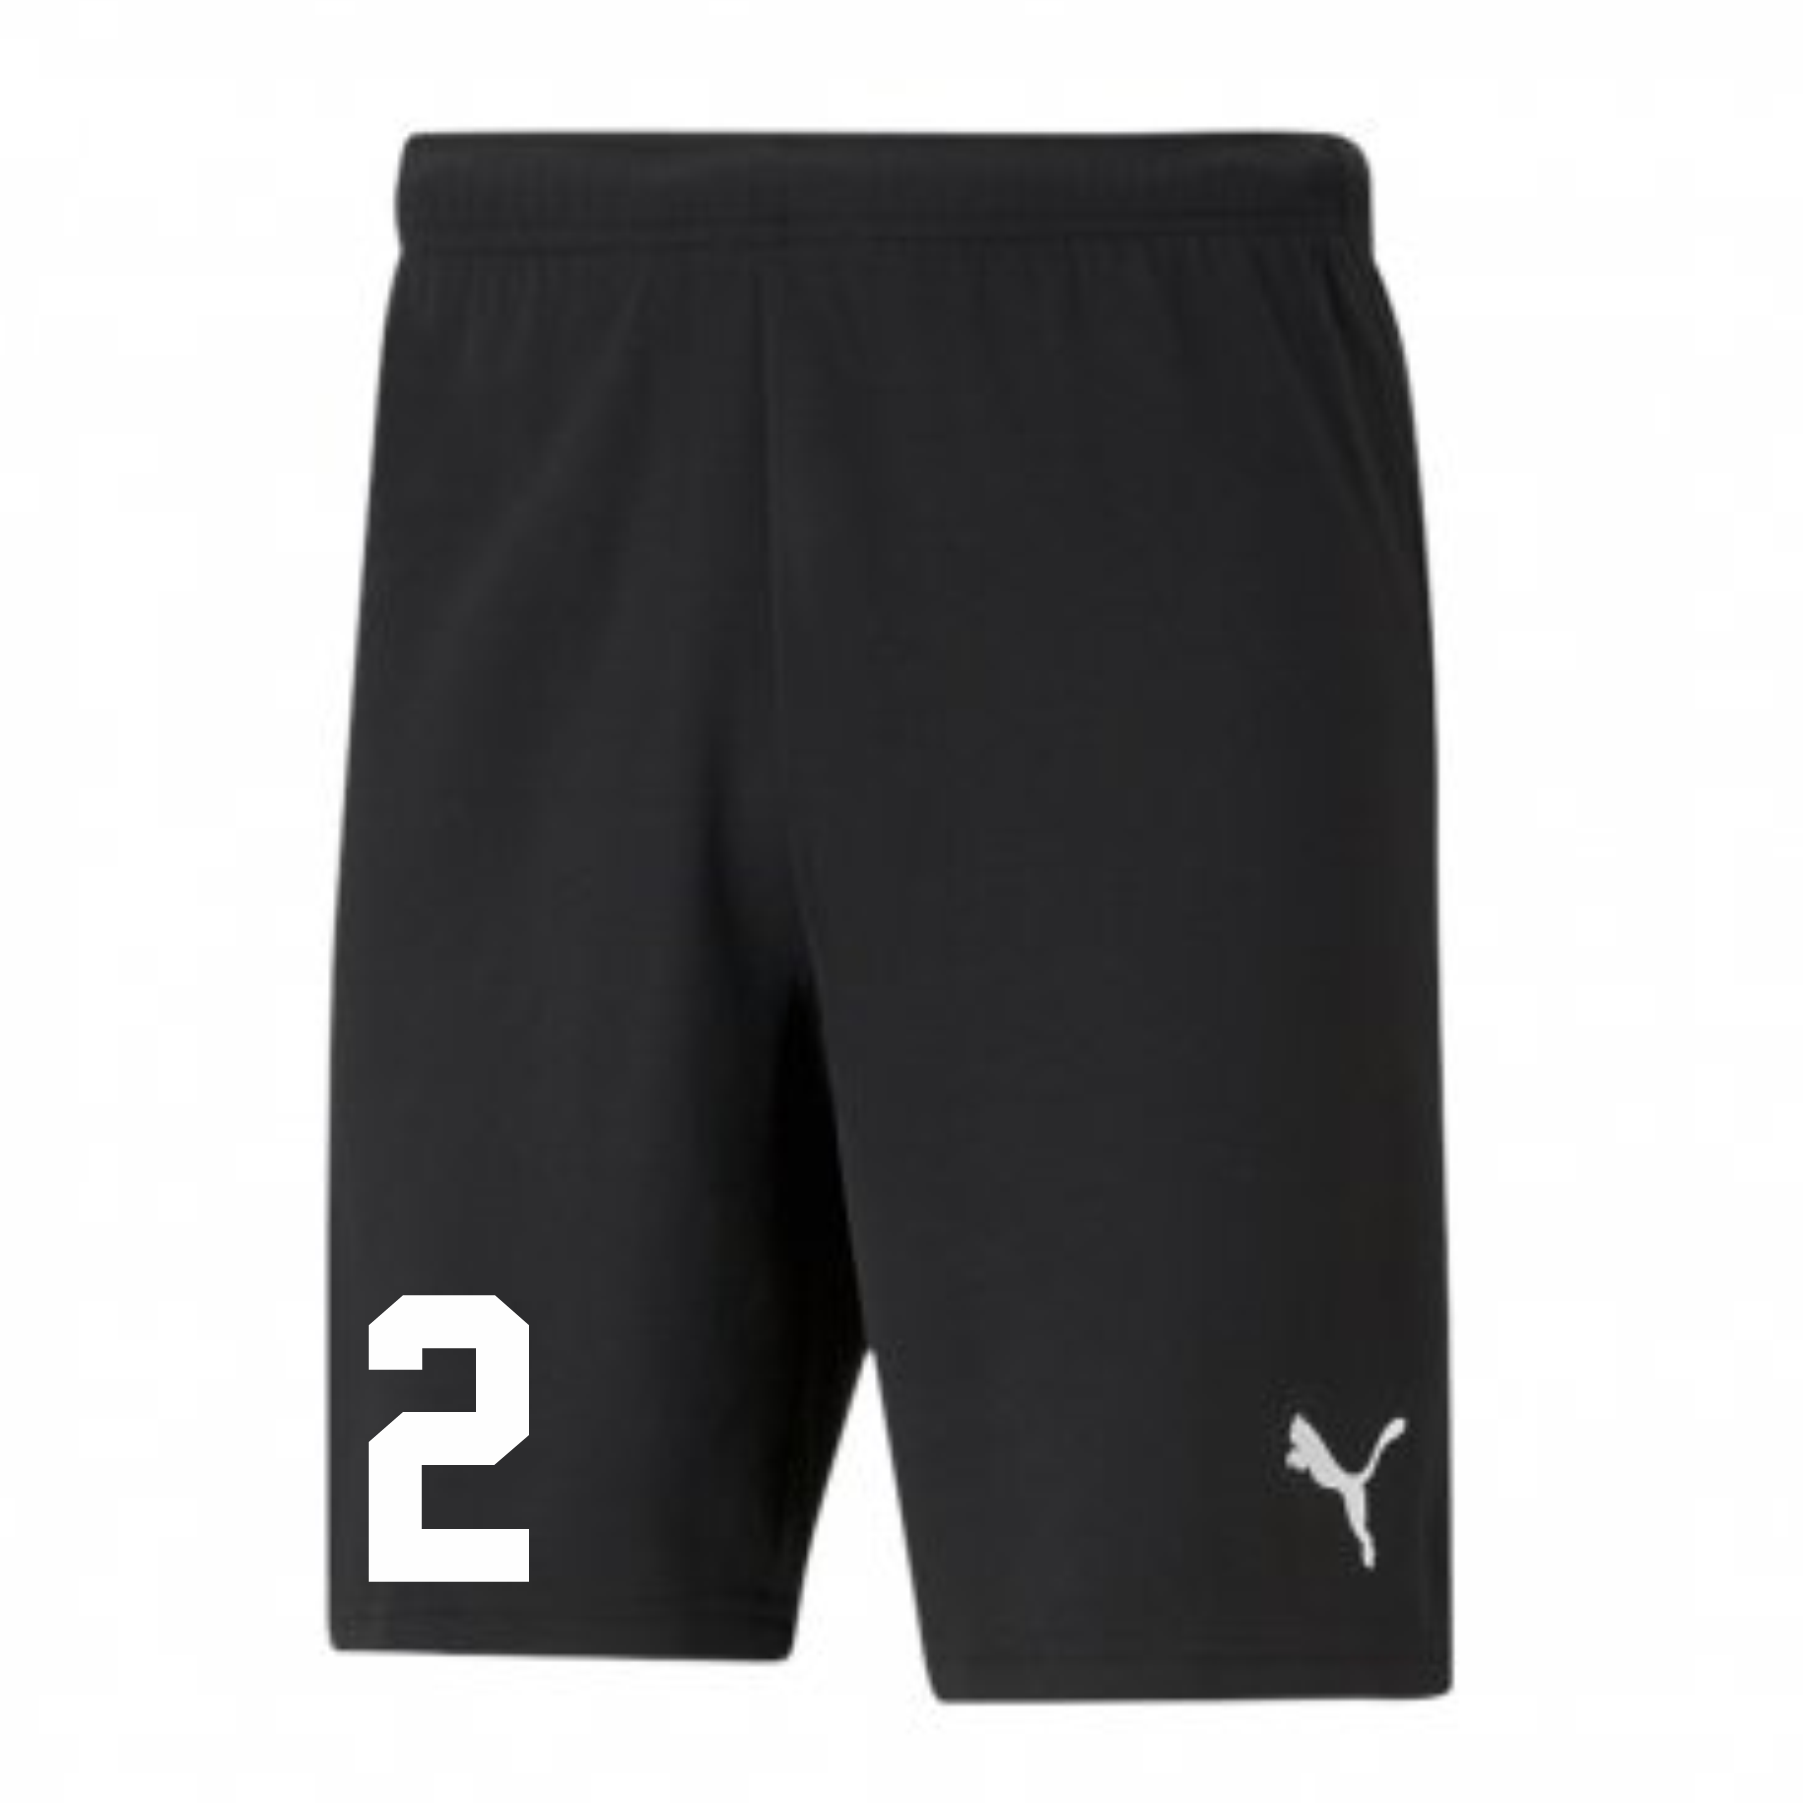 Weyburn Player Shorts